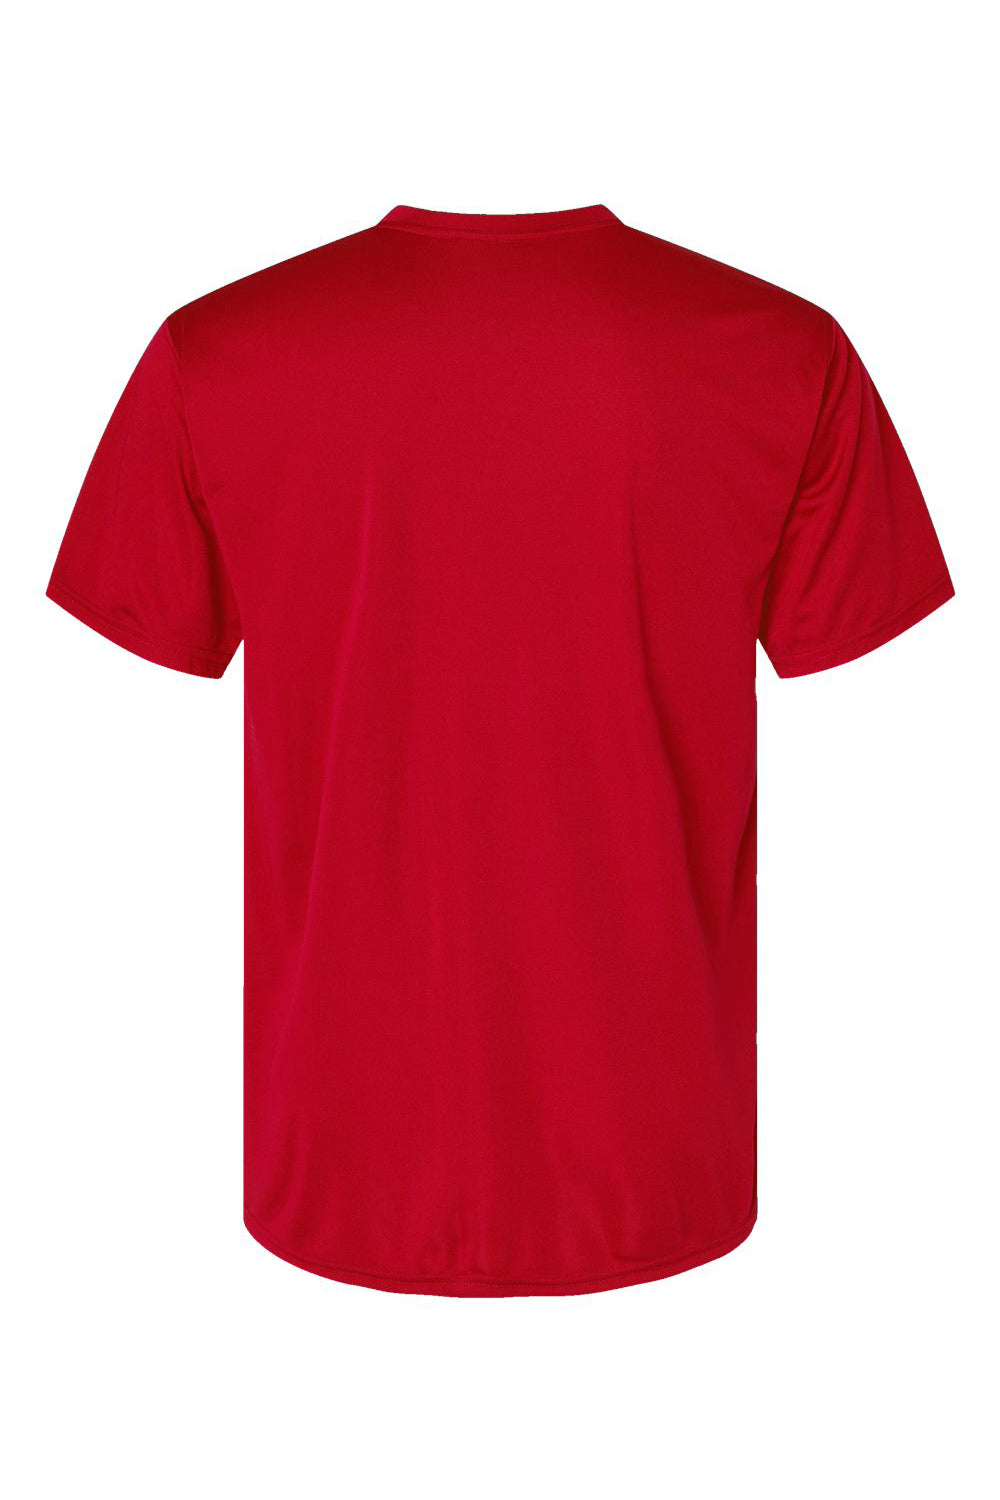 Holloway 222818 Mens Momentum Short Sleeve Crewneck T-Shirt Scarlet Red Flat Back